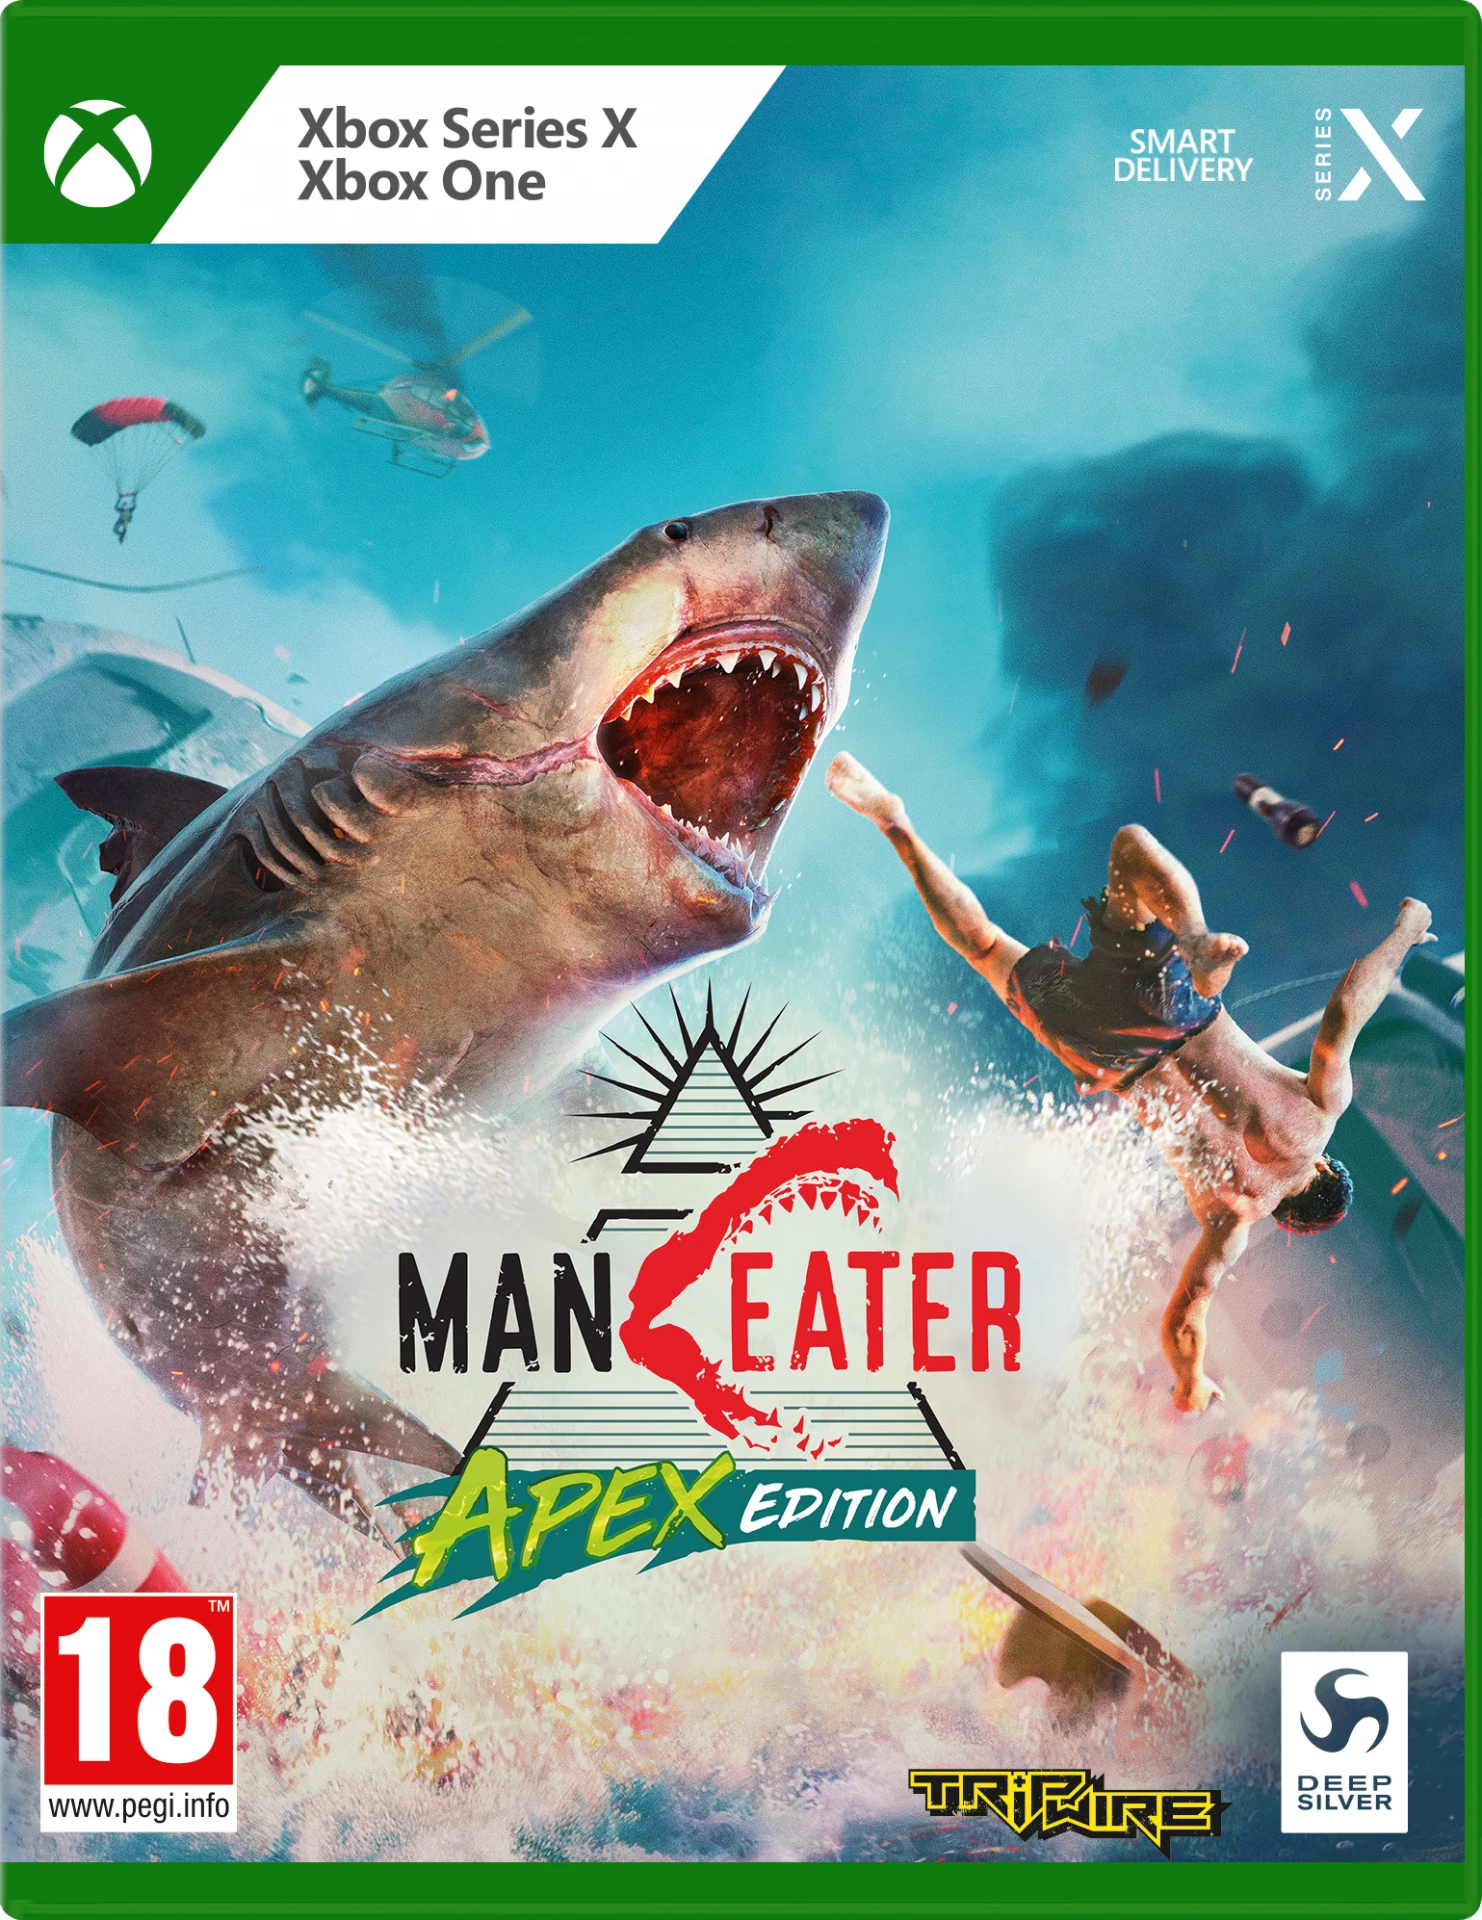 ManEater - Apex Edition (Xbox Series X), Tripwire